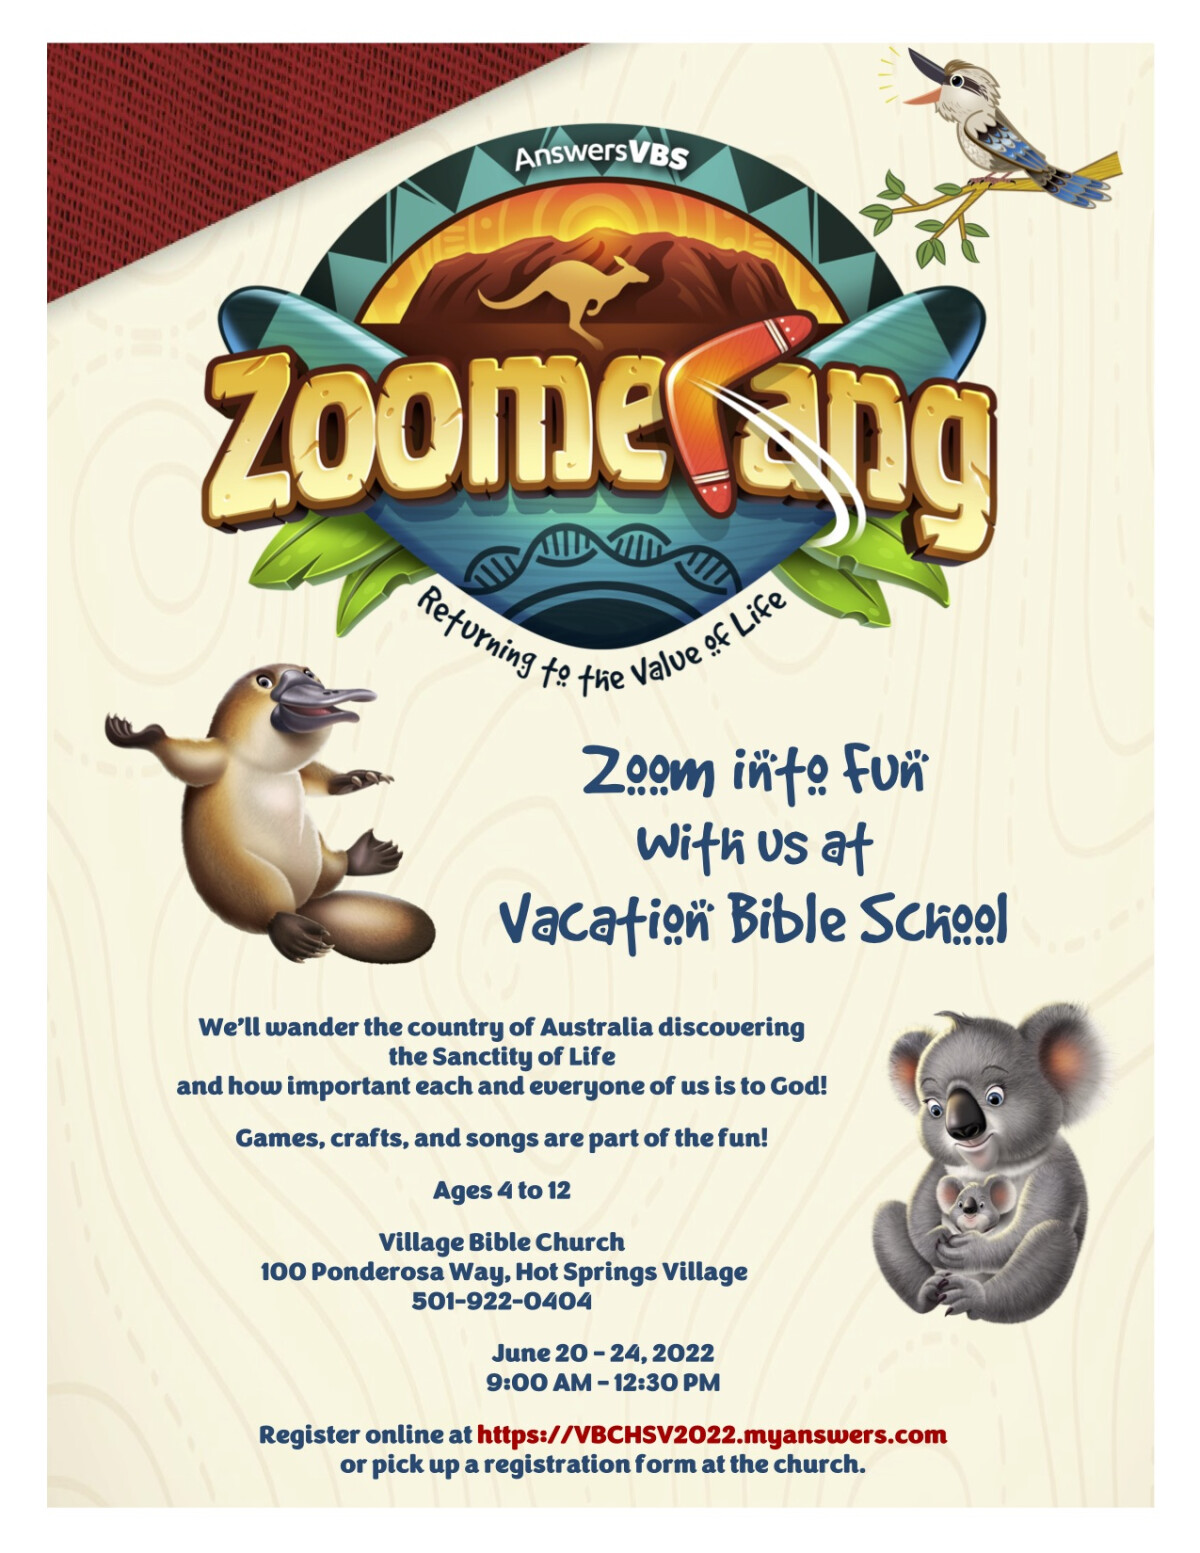 Vacation Bible School 2022 Zoomerang!